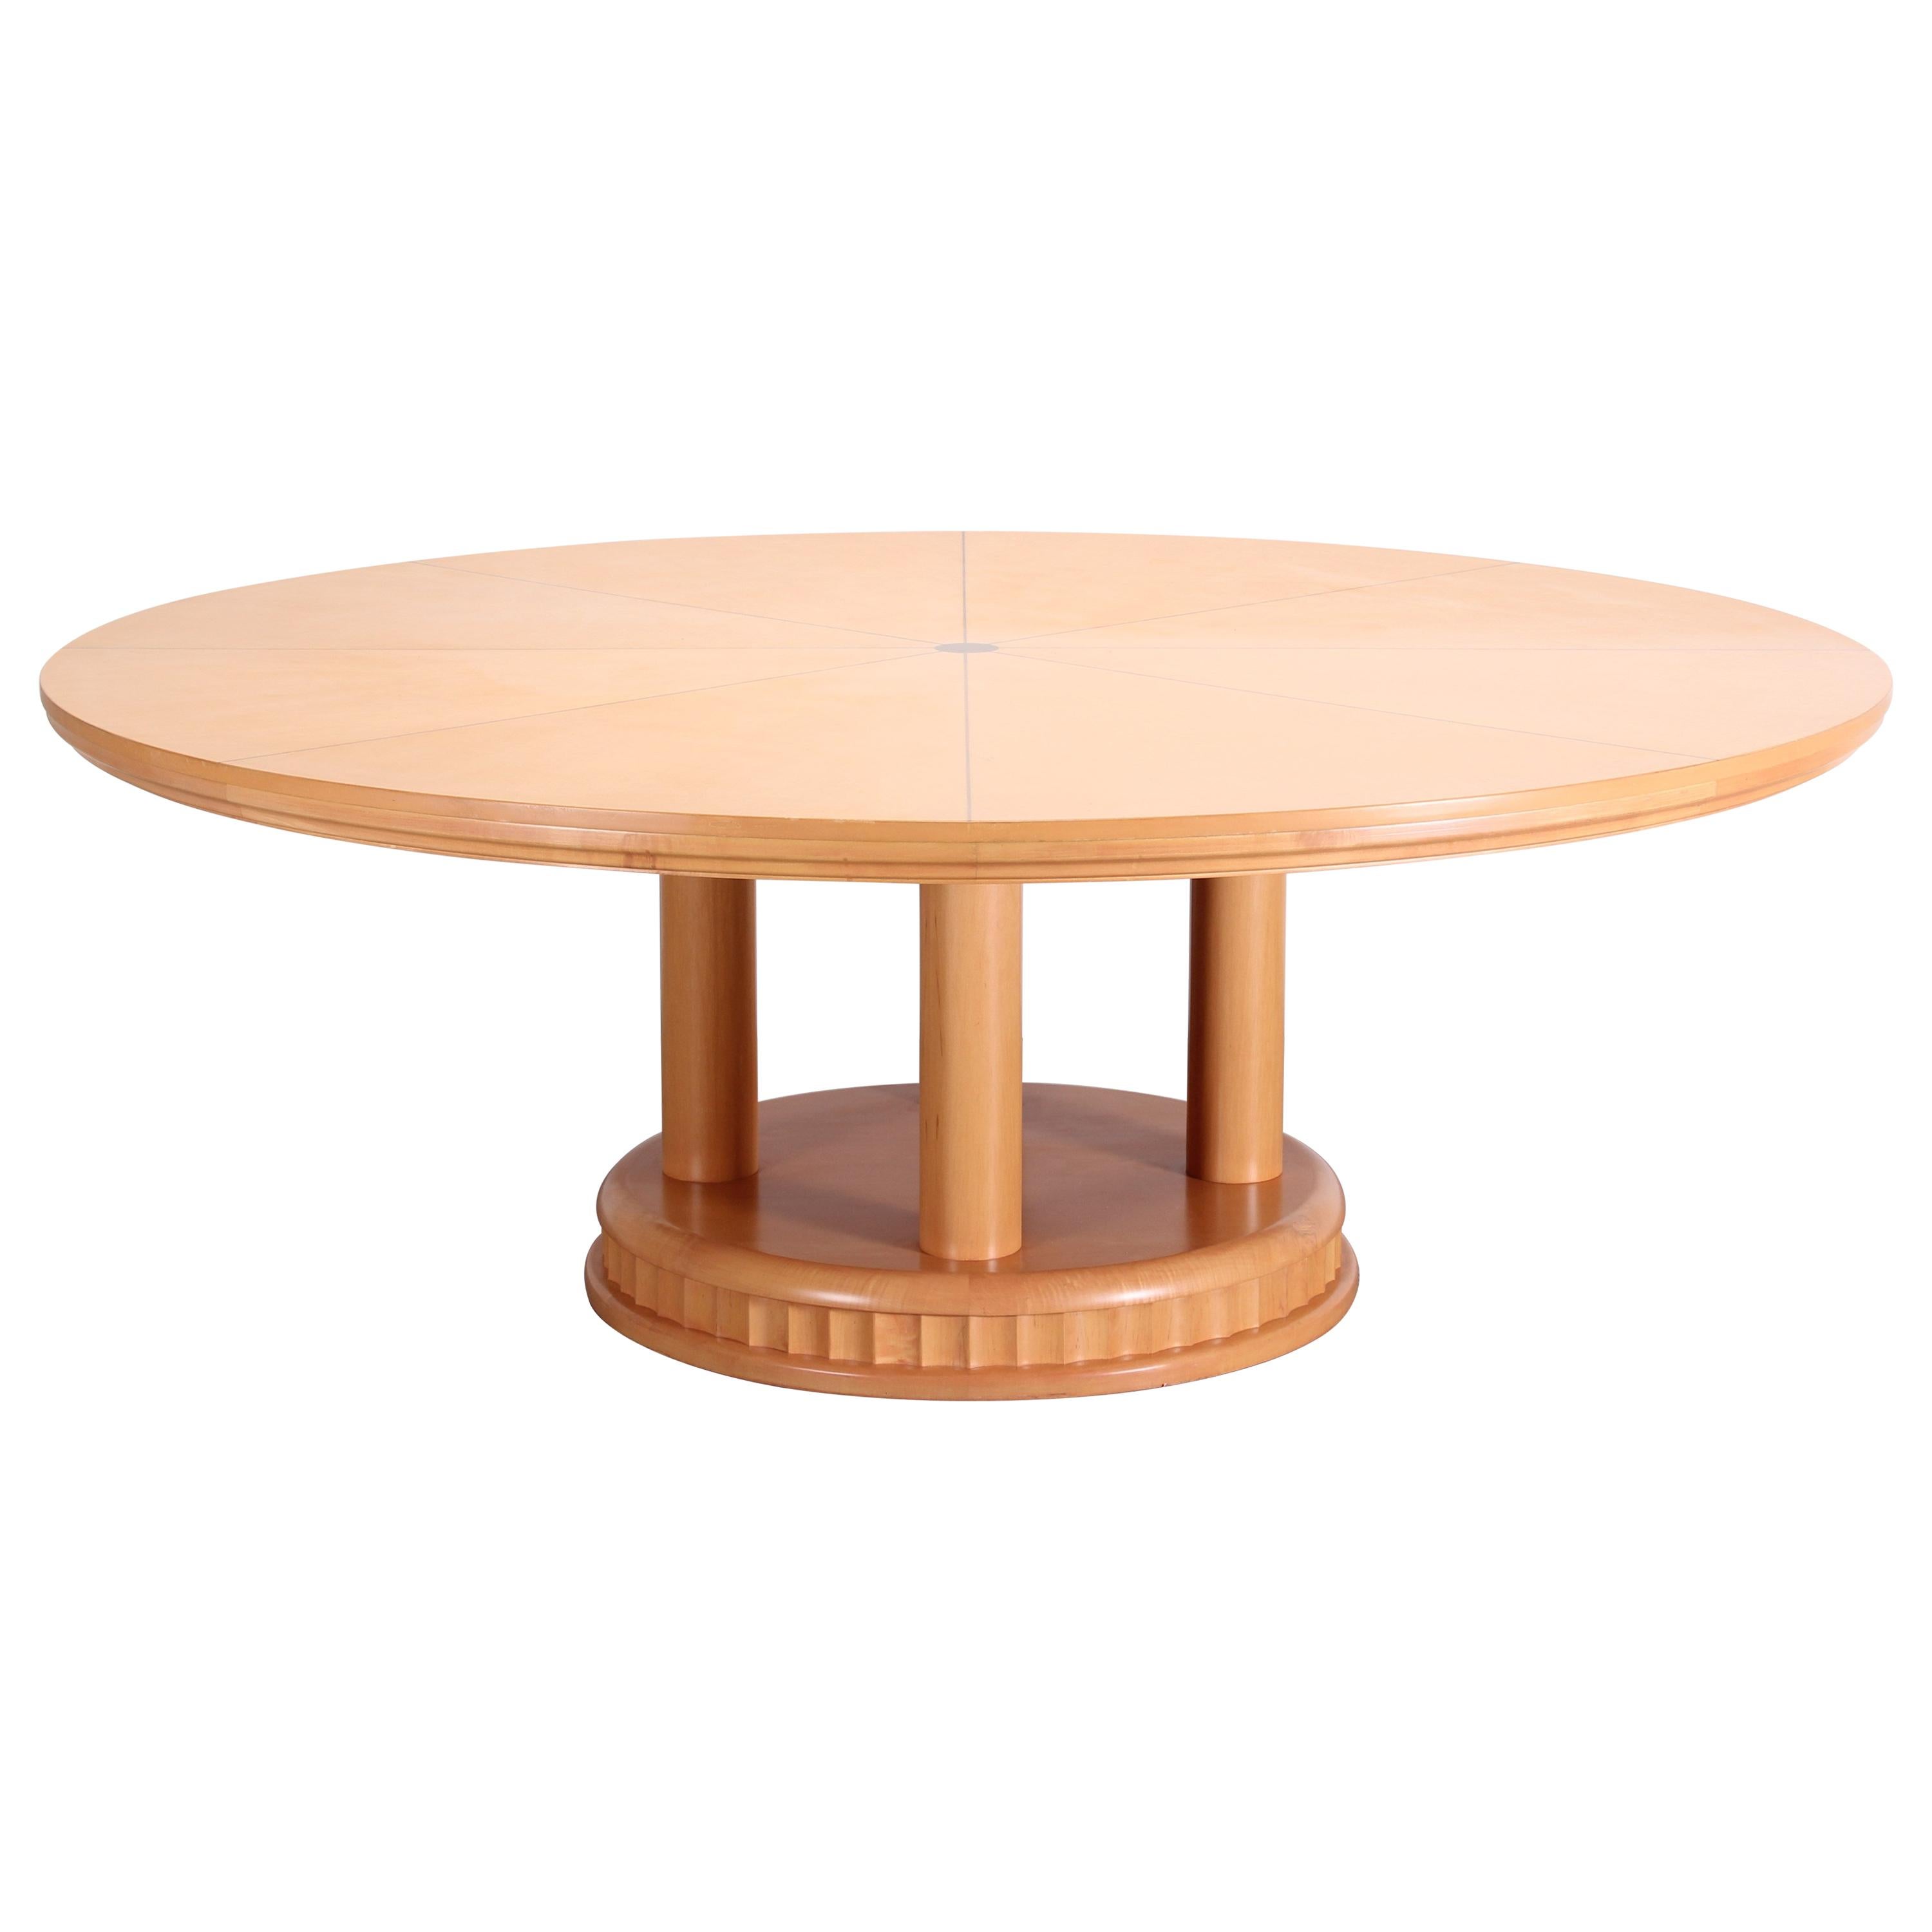 Custom Biedermeier Dining Table By Continental Furniture Company